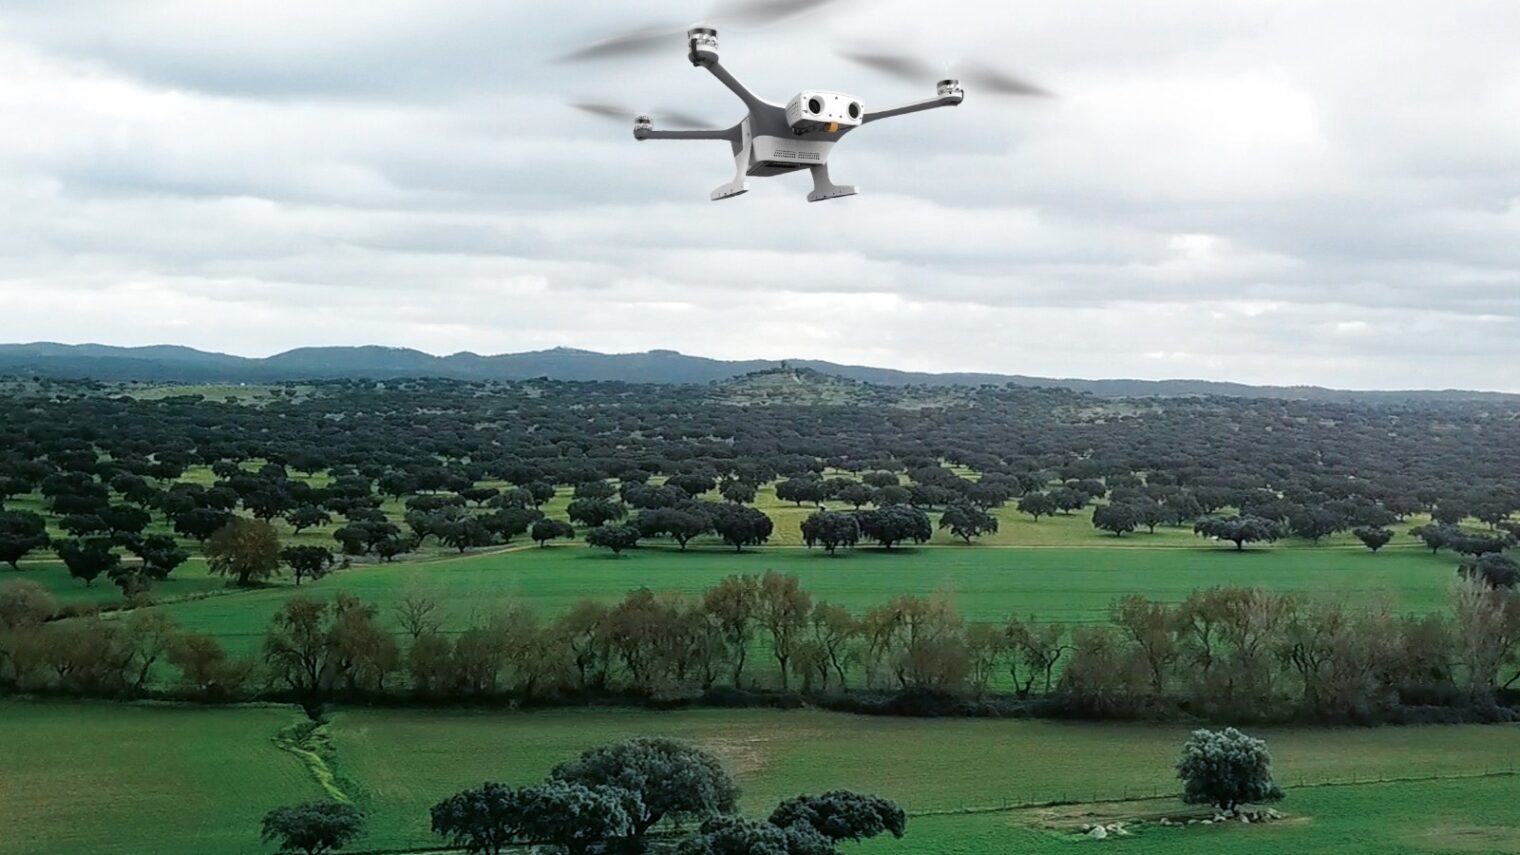 Percepto’s Sparrow drone over a solar farm. Photo: courtesy